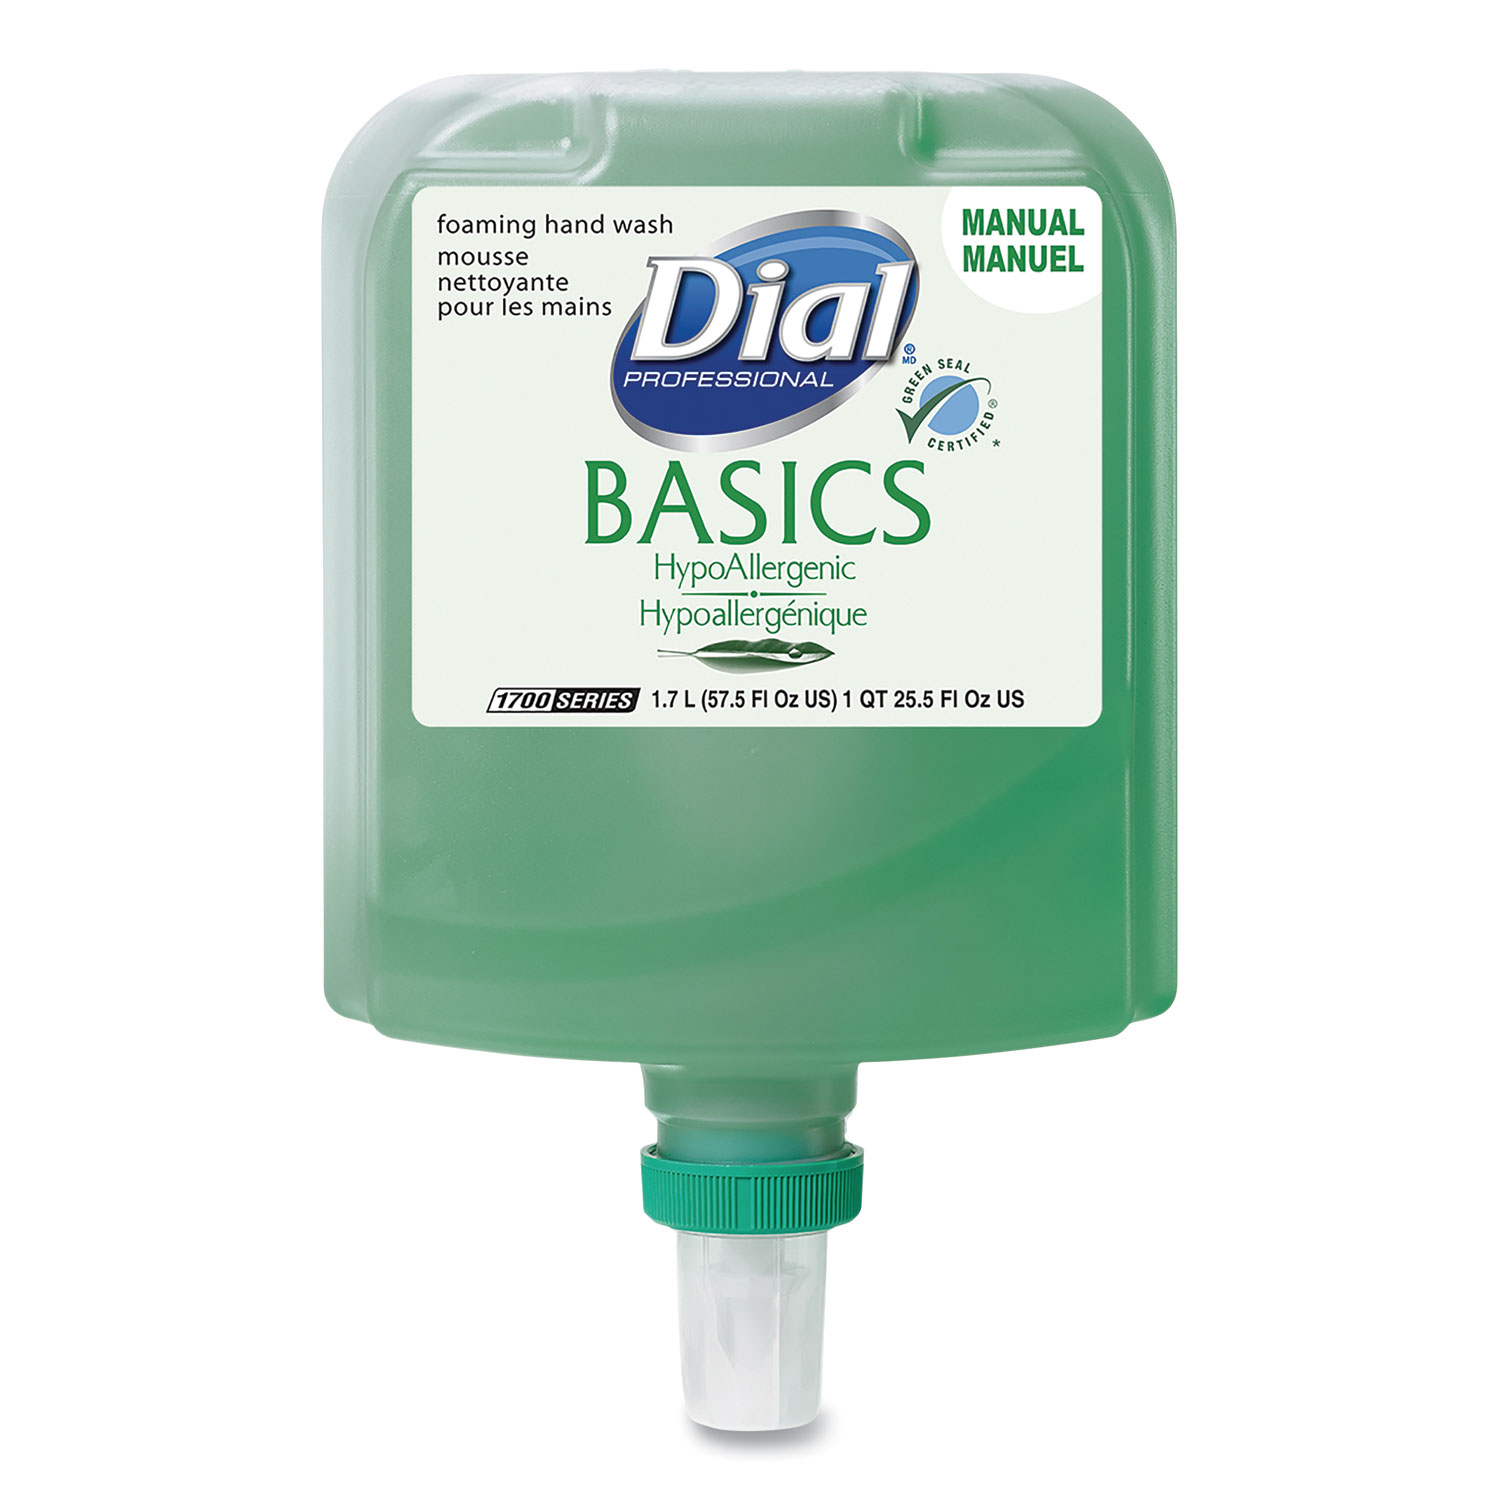 Dial® Professional Dial 1700 Manual Refill Basics Foaming Hand Wash, Honeysuckle, 1.7 L Bottle